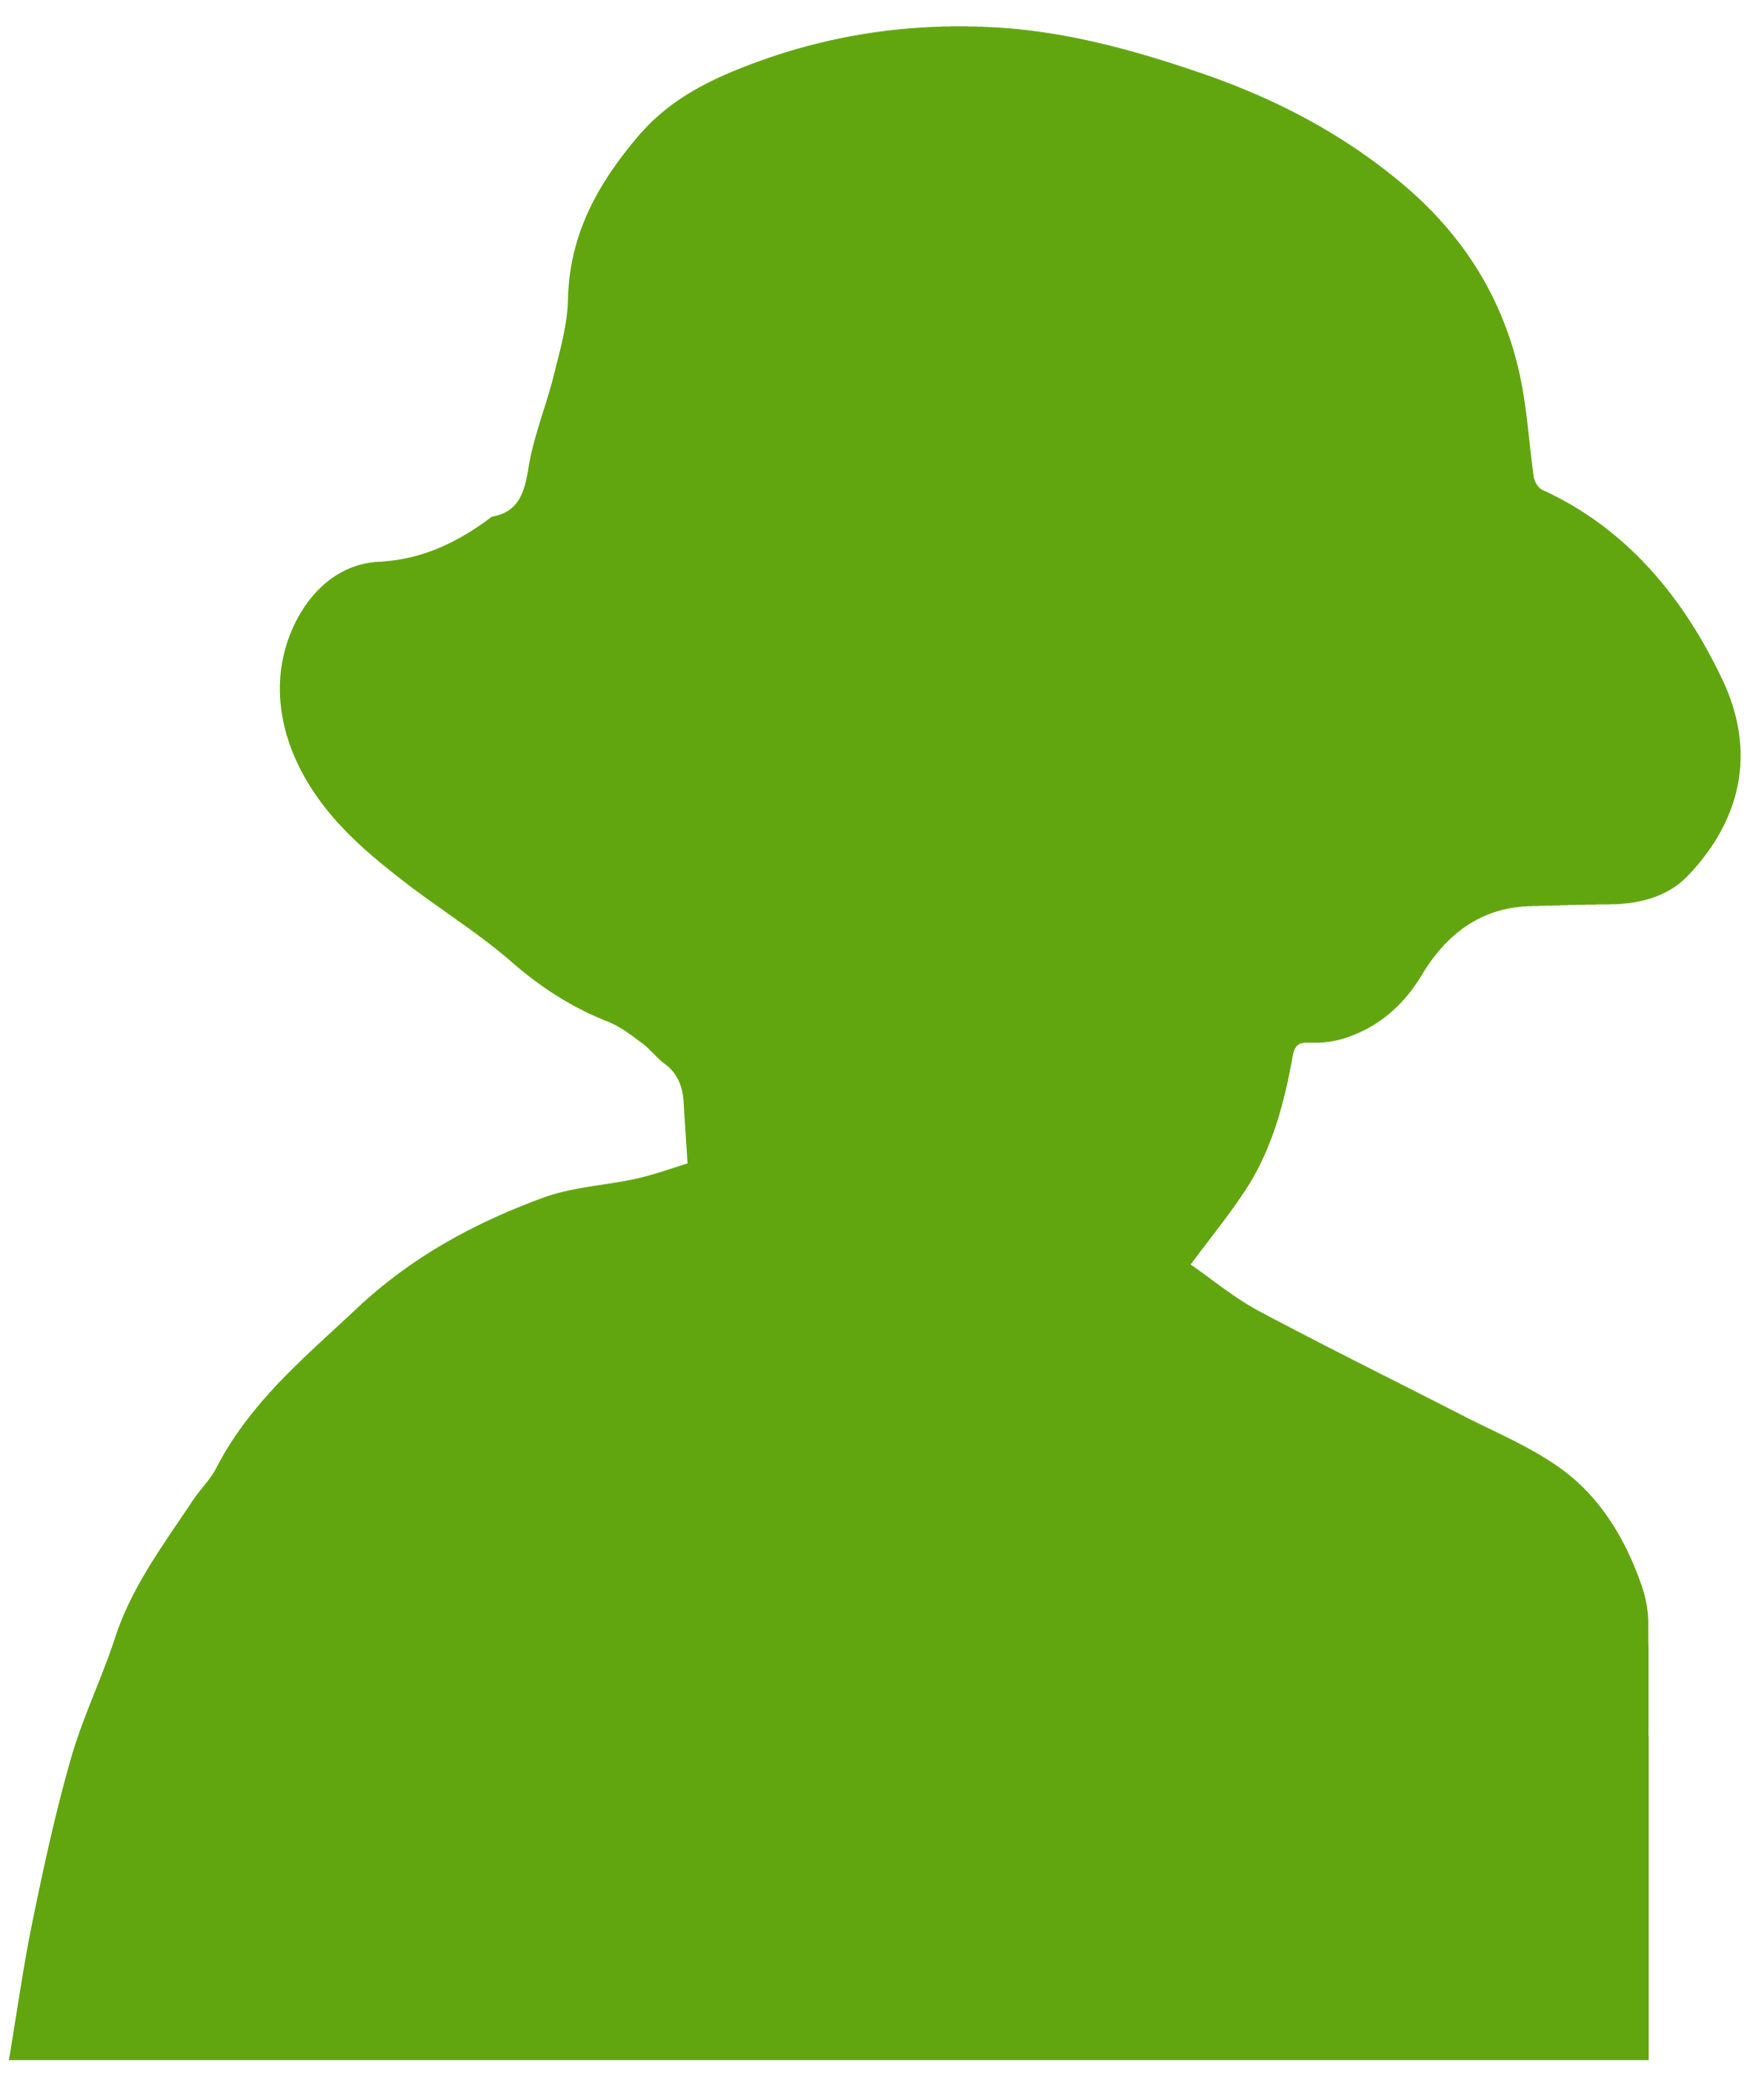 Green silhouette of Agnes Colquhoun Thomson